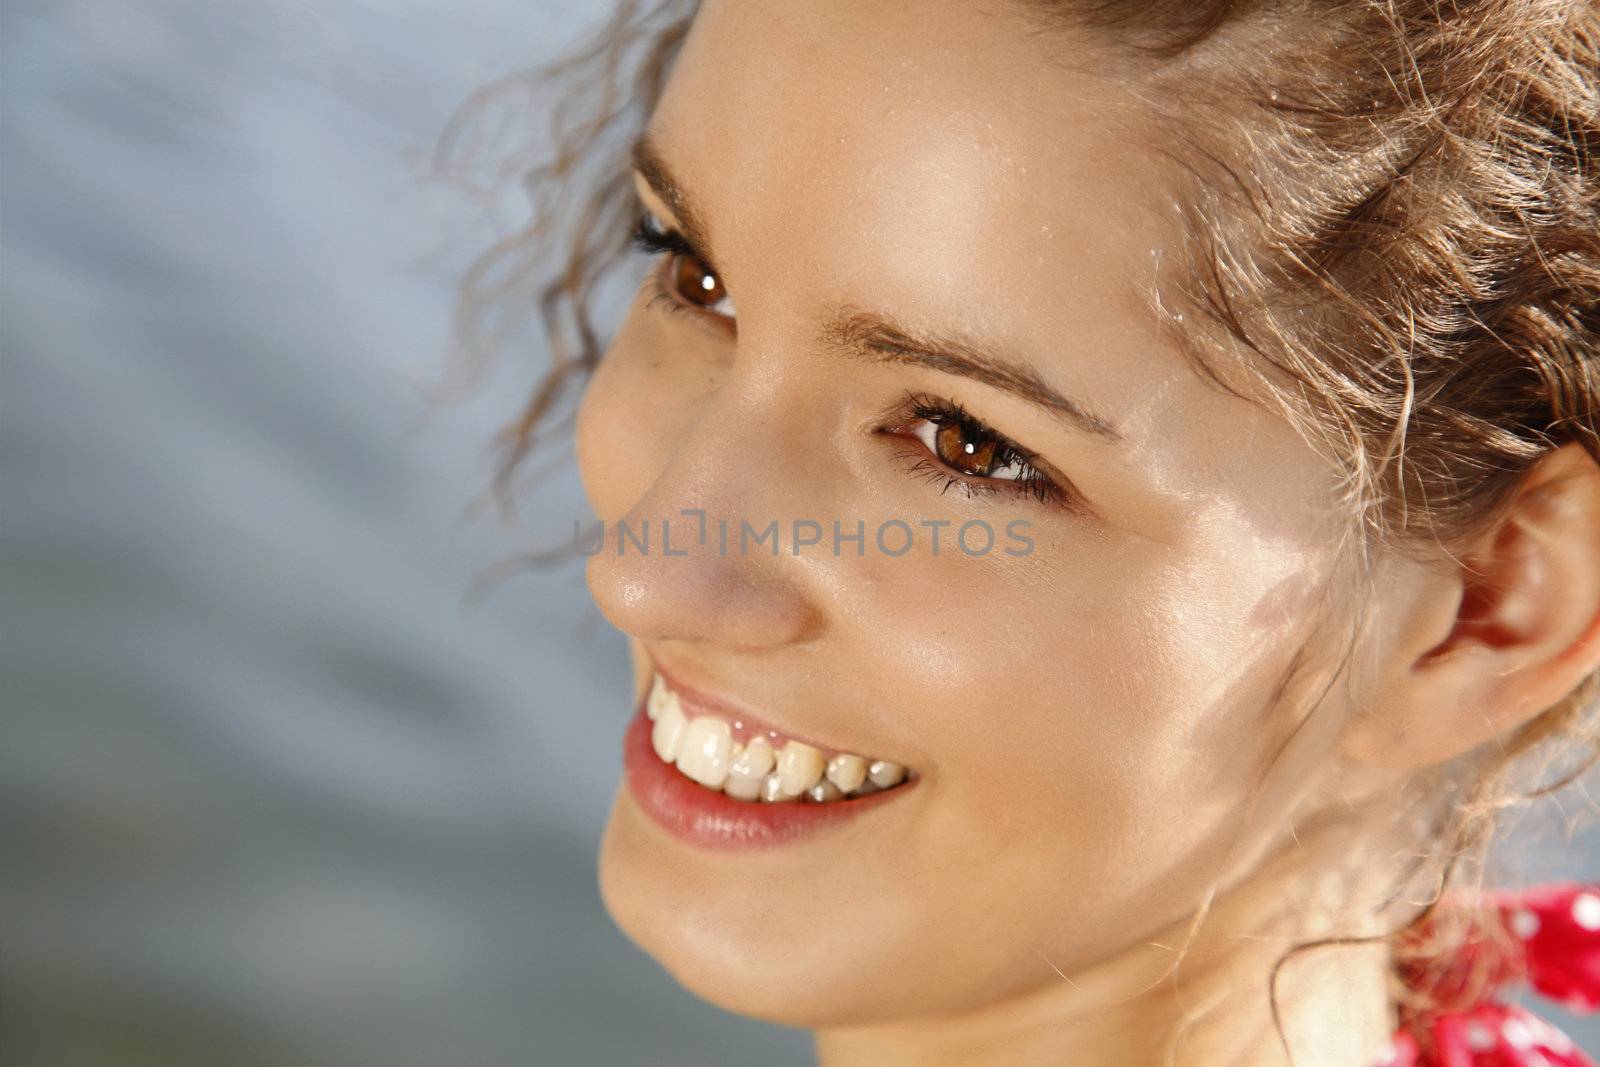 Gorgeous Closeup Smile by nfx702